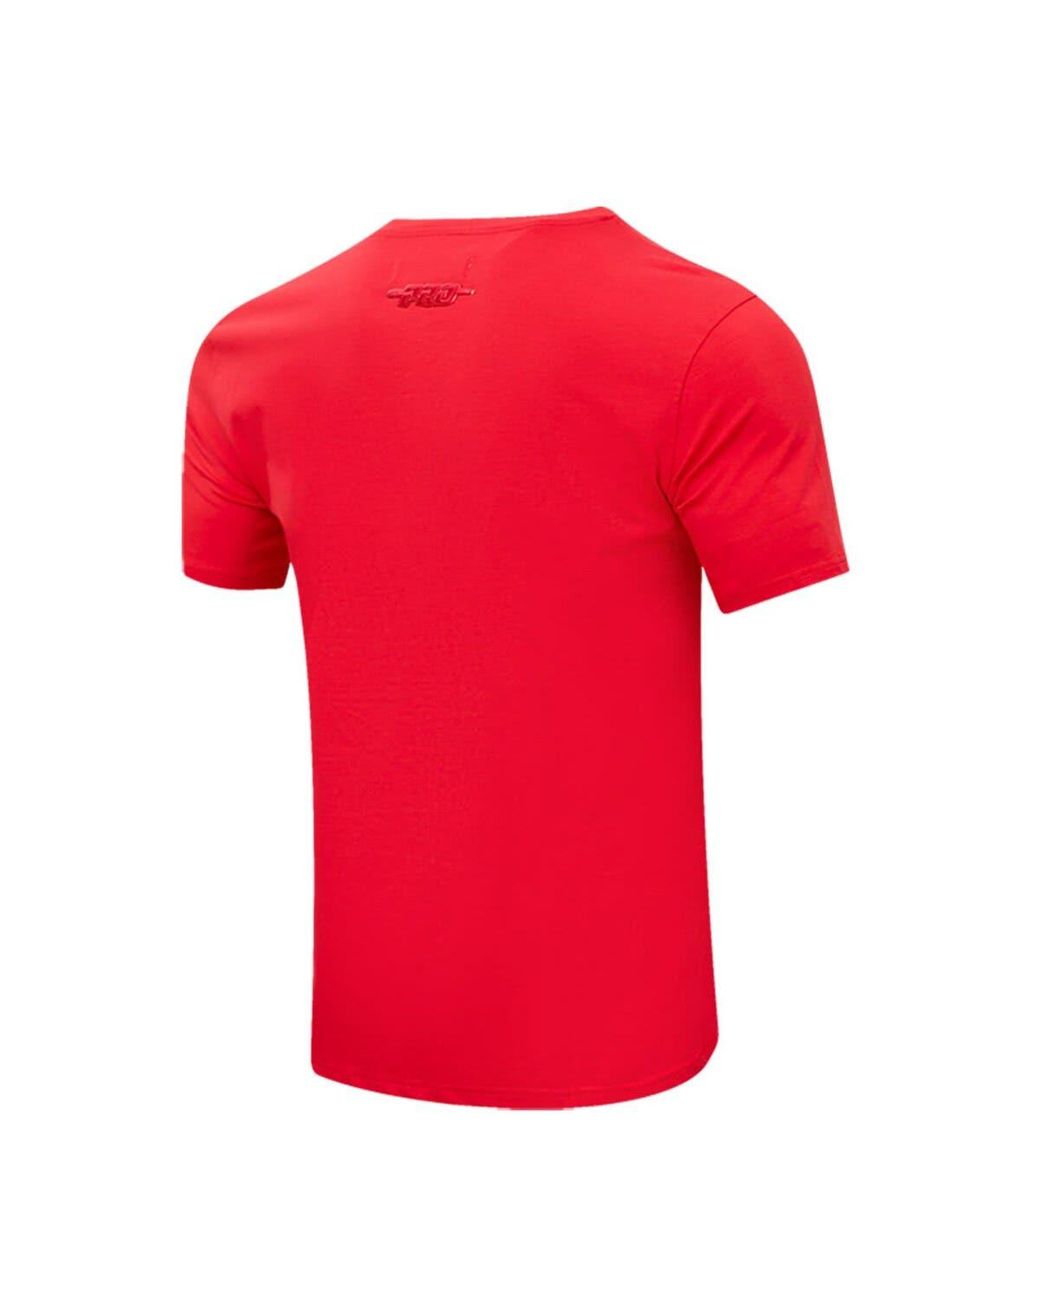 Men's San Diego Padres Pro Standard Blue/Pink Ombre T-Shirt